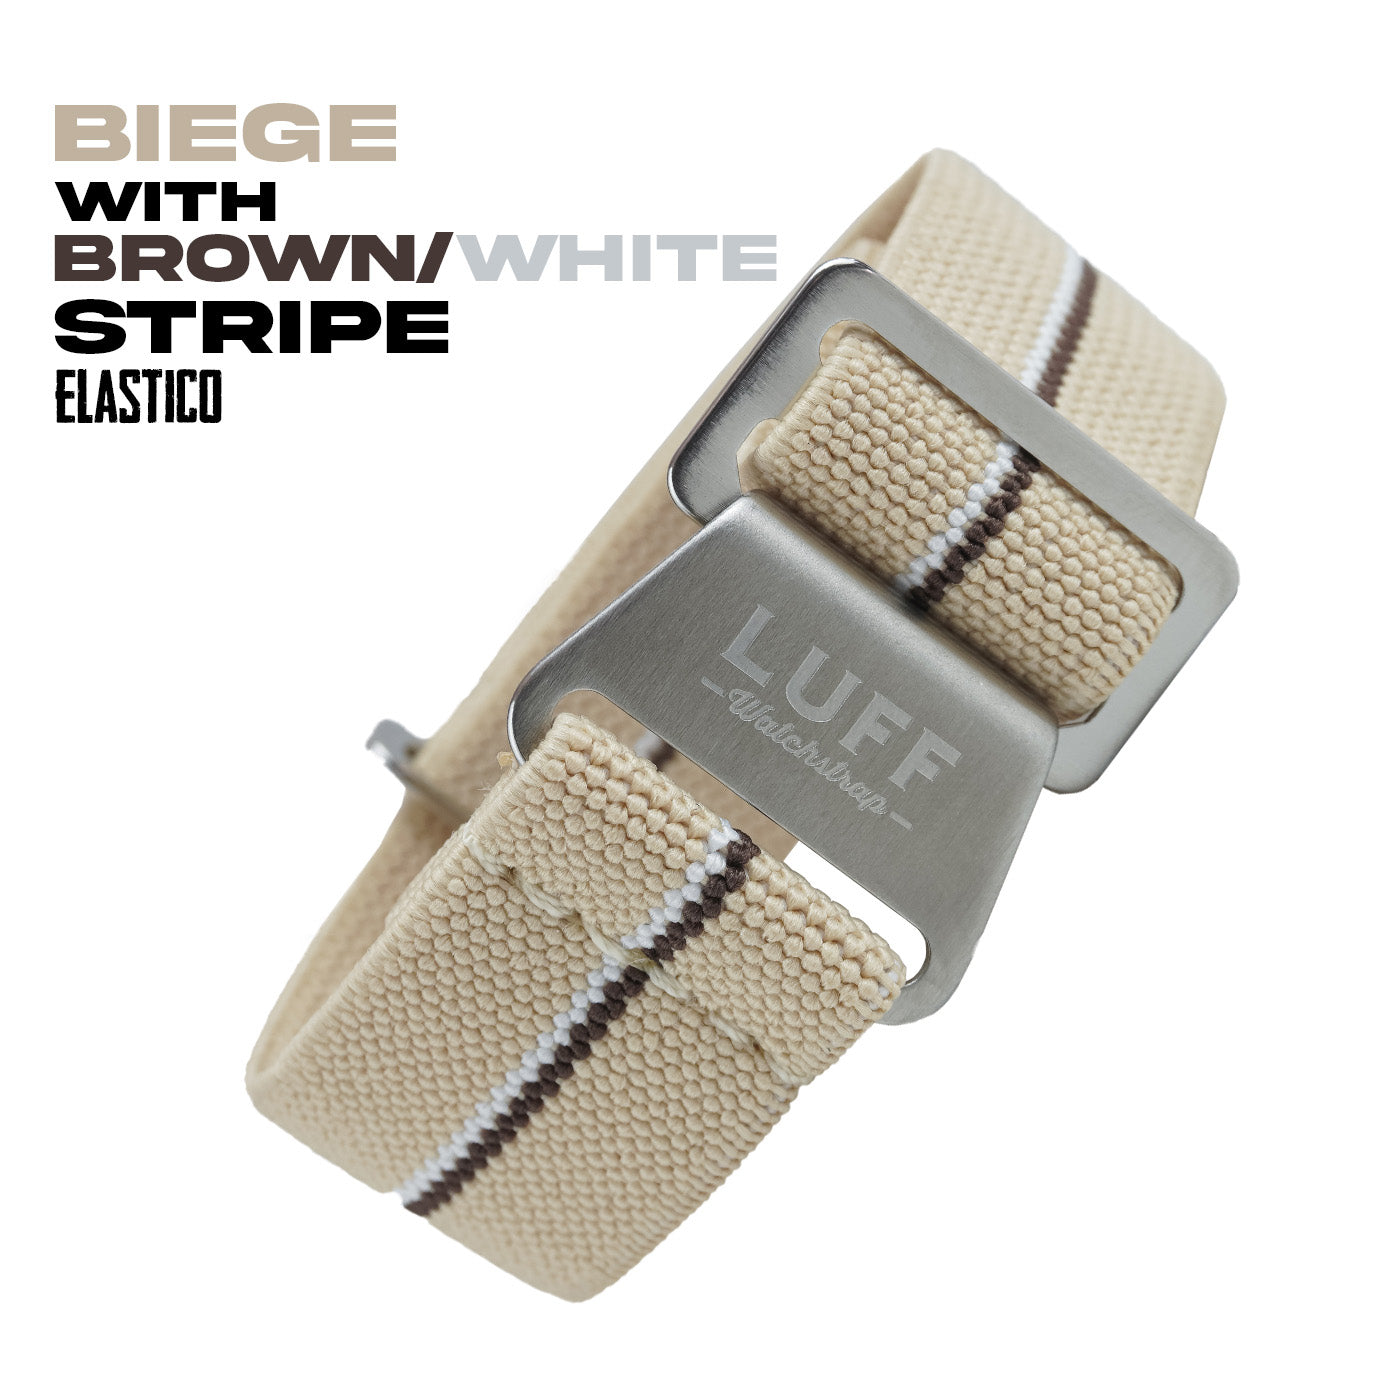 Beige with Brown/White Stripe (6904191844439)